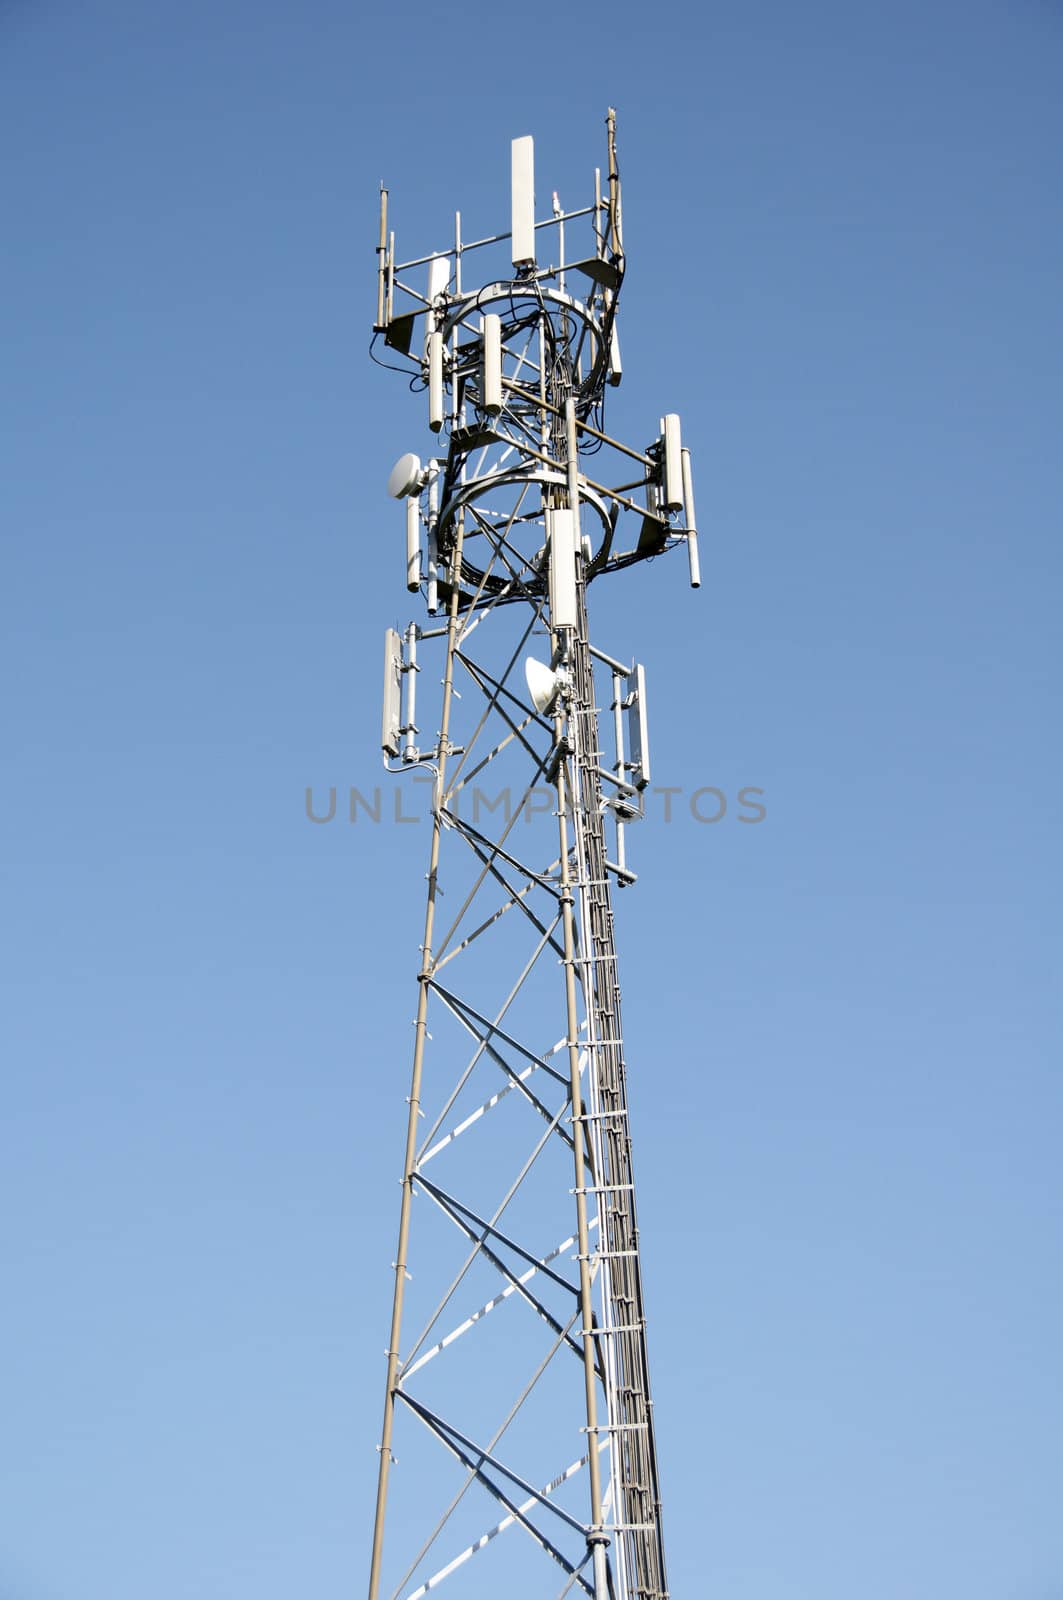 Phone mast by mbtaichi